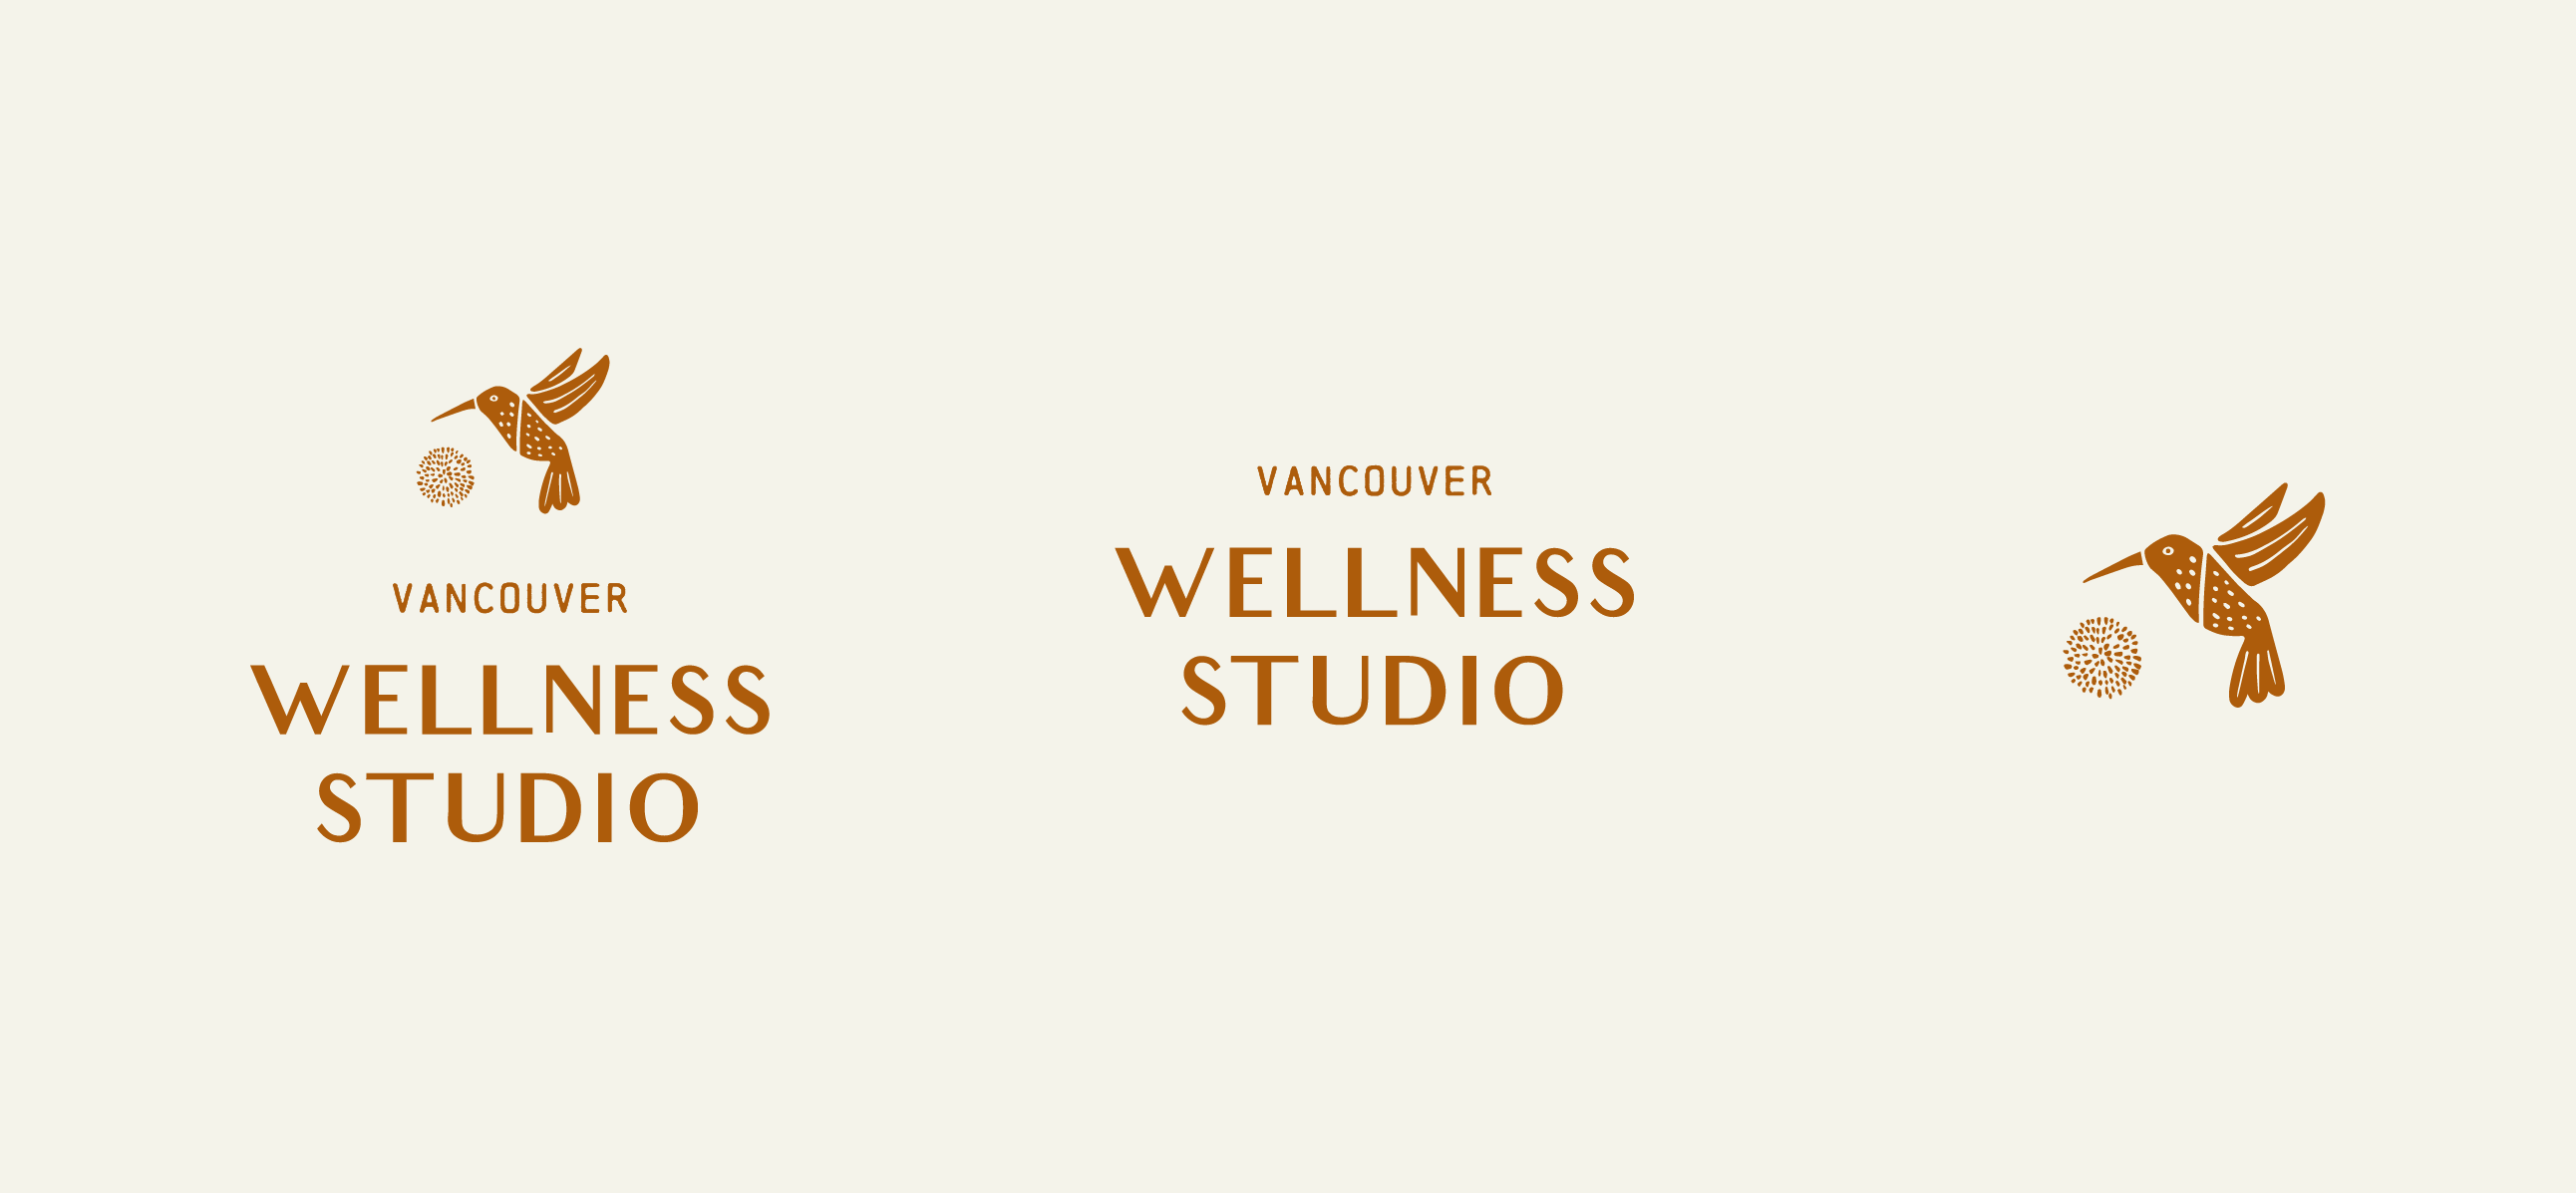 Vancouver Wellness Studio Branding 2